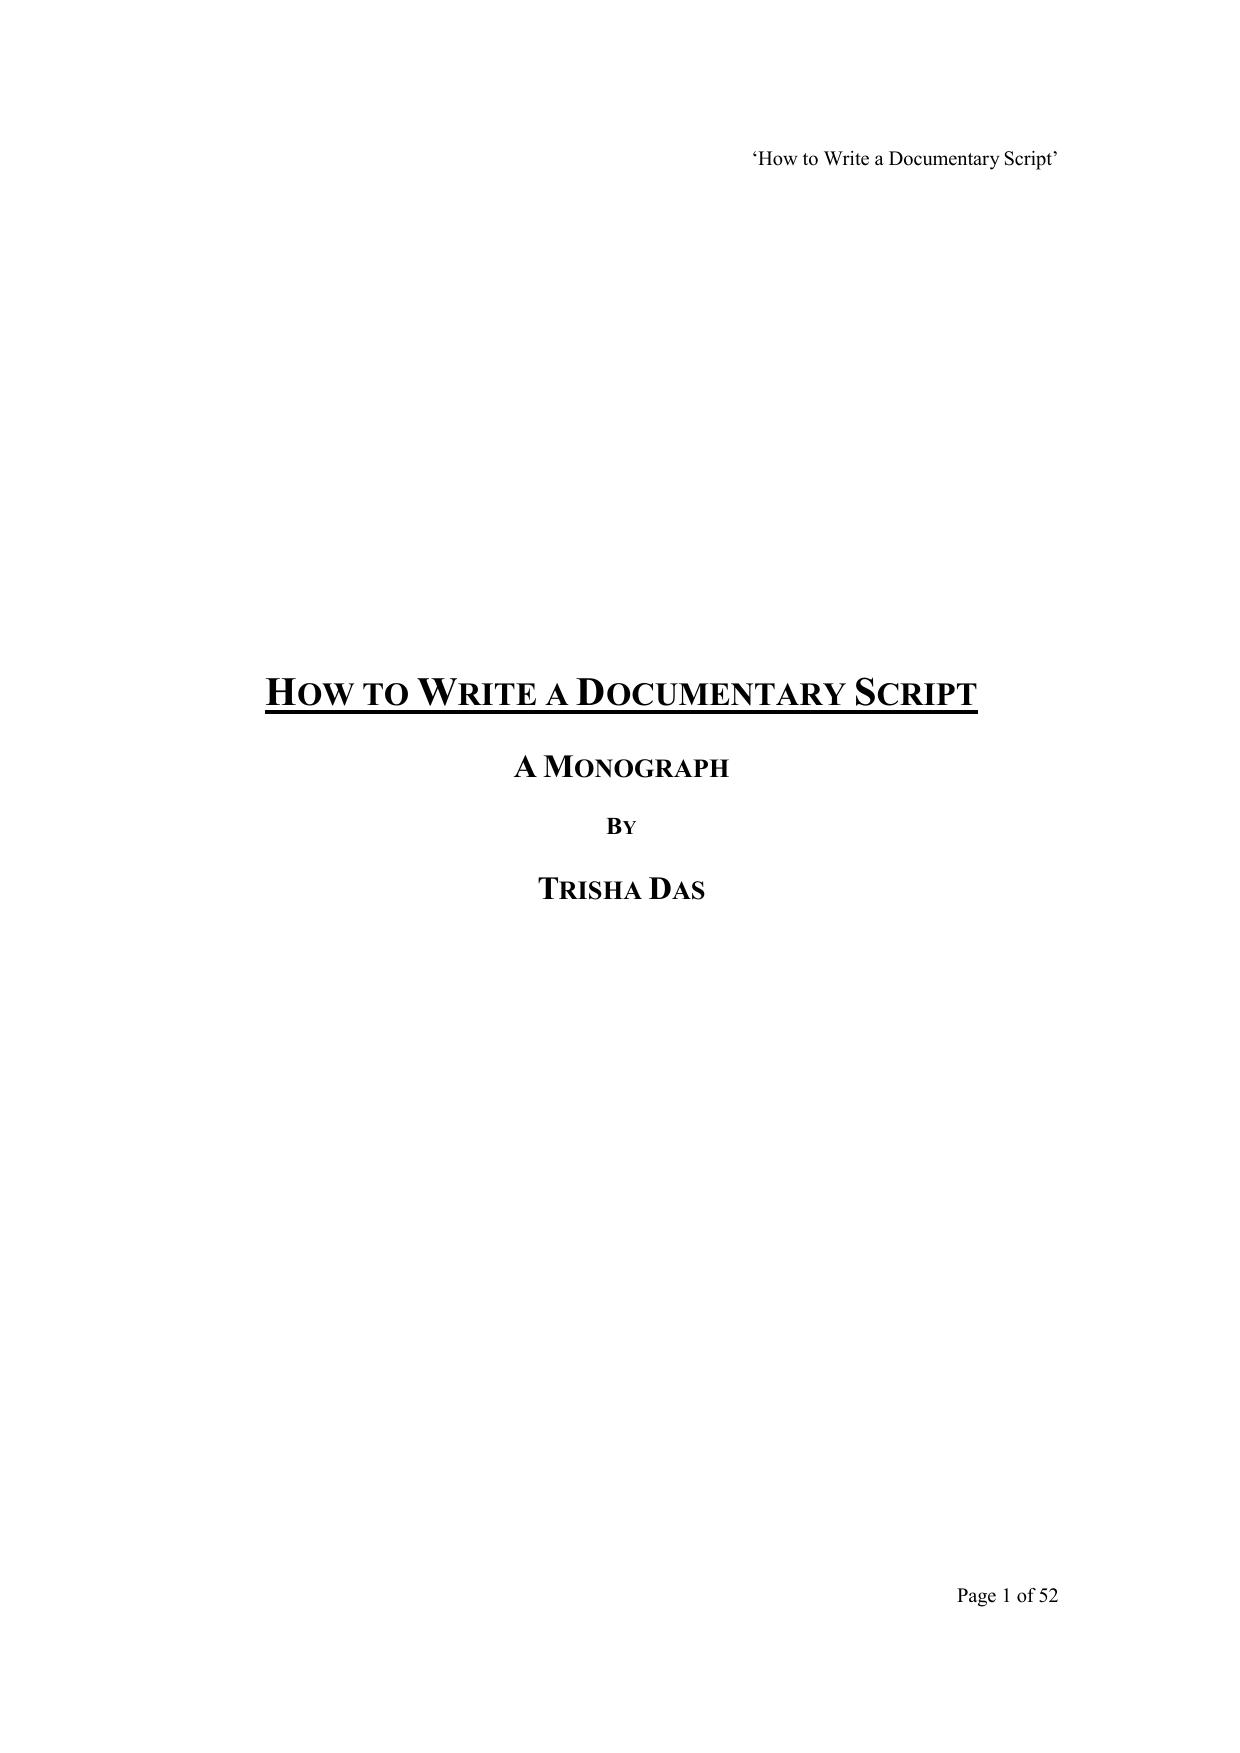 How to Write a Documentary Script.doc